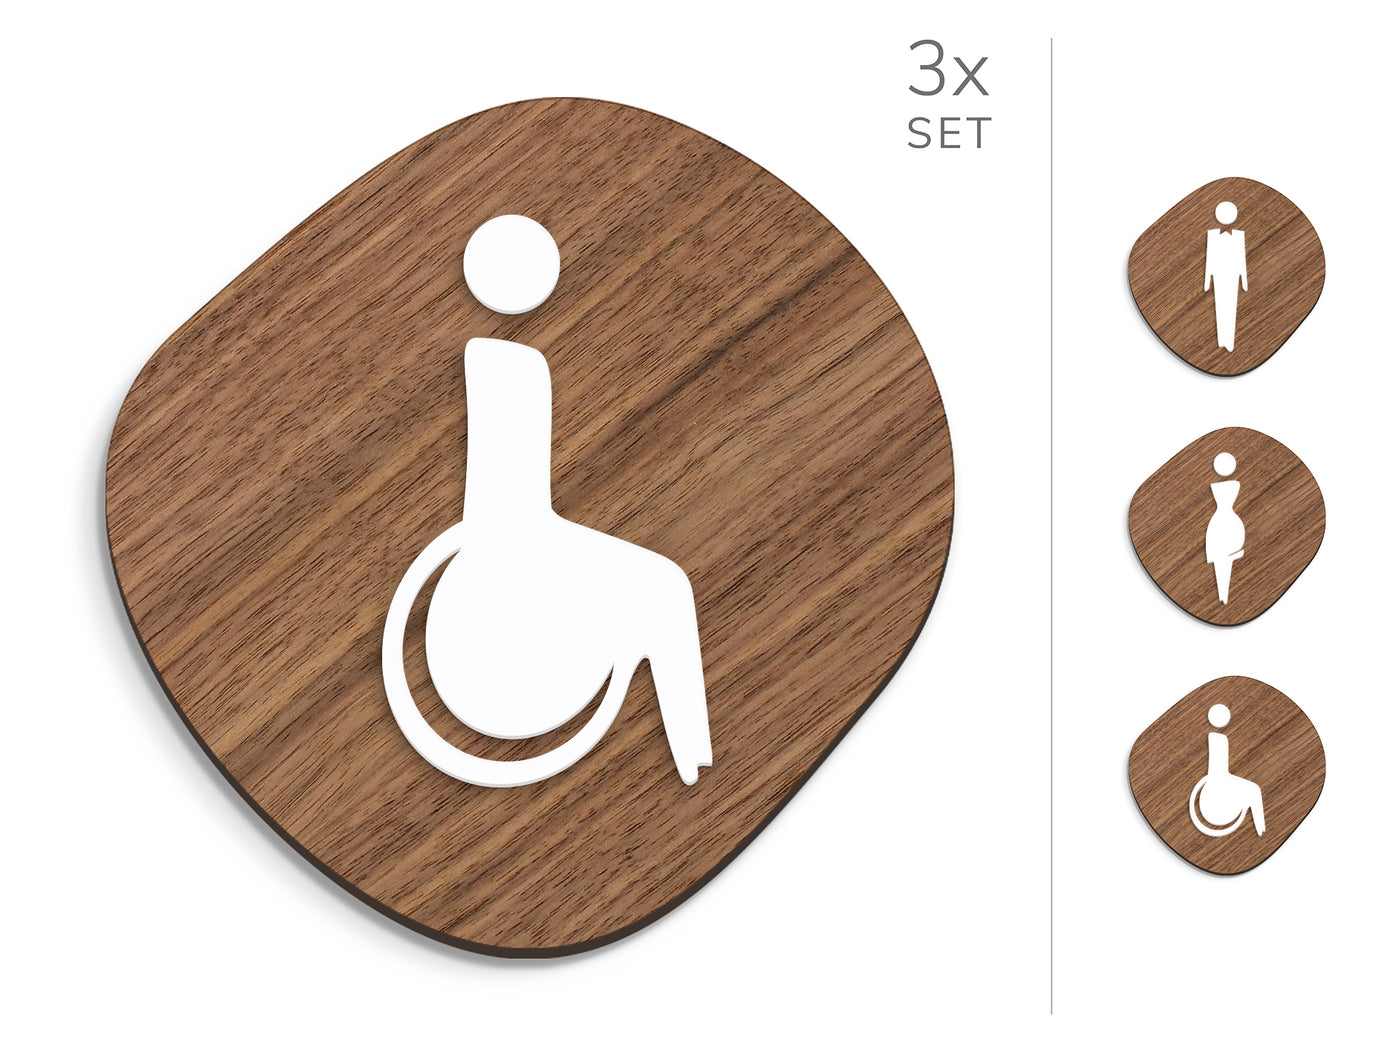 Elegant, 3x Stone shaped Base - Restroom Signs Set - Man, Woman, Disabled